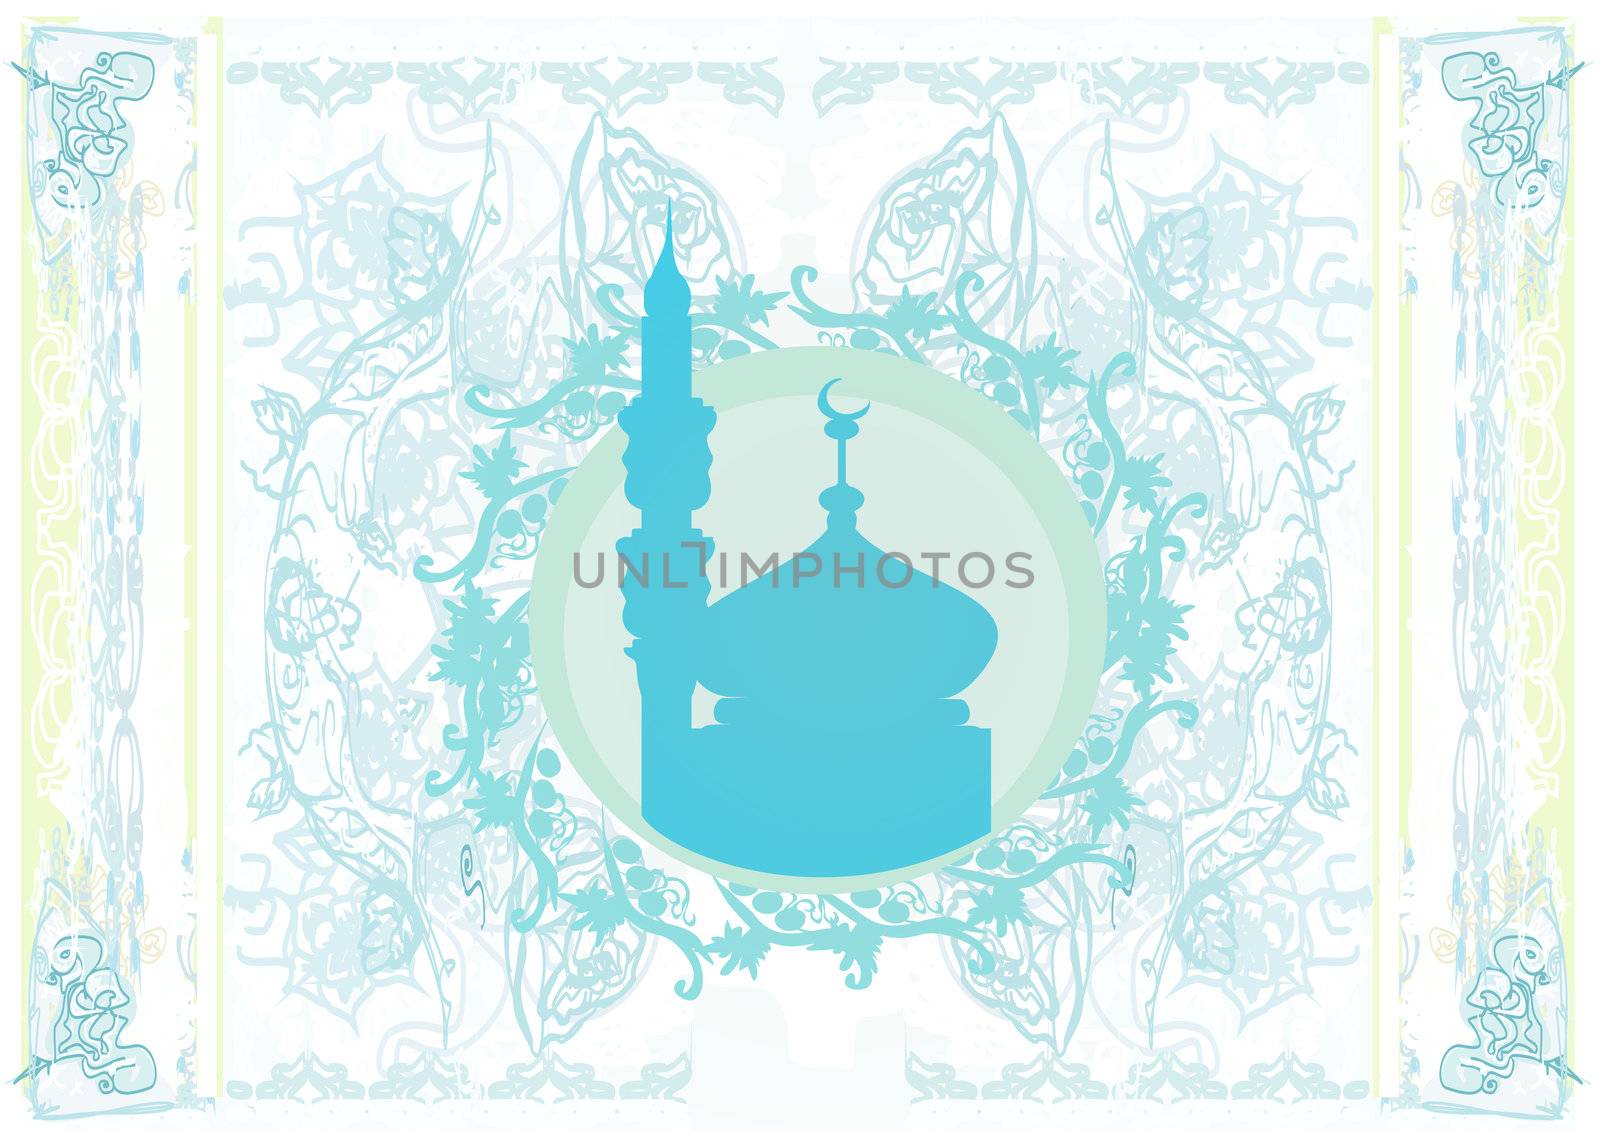 Ramadan background - mosque silhouette vector card